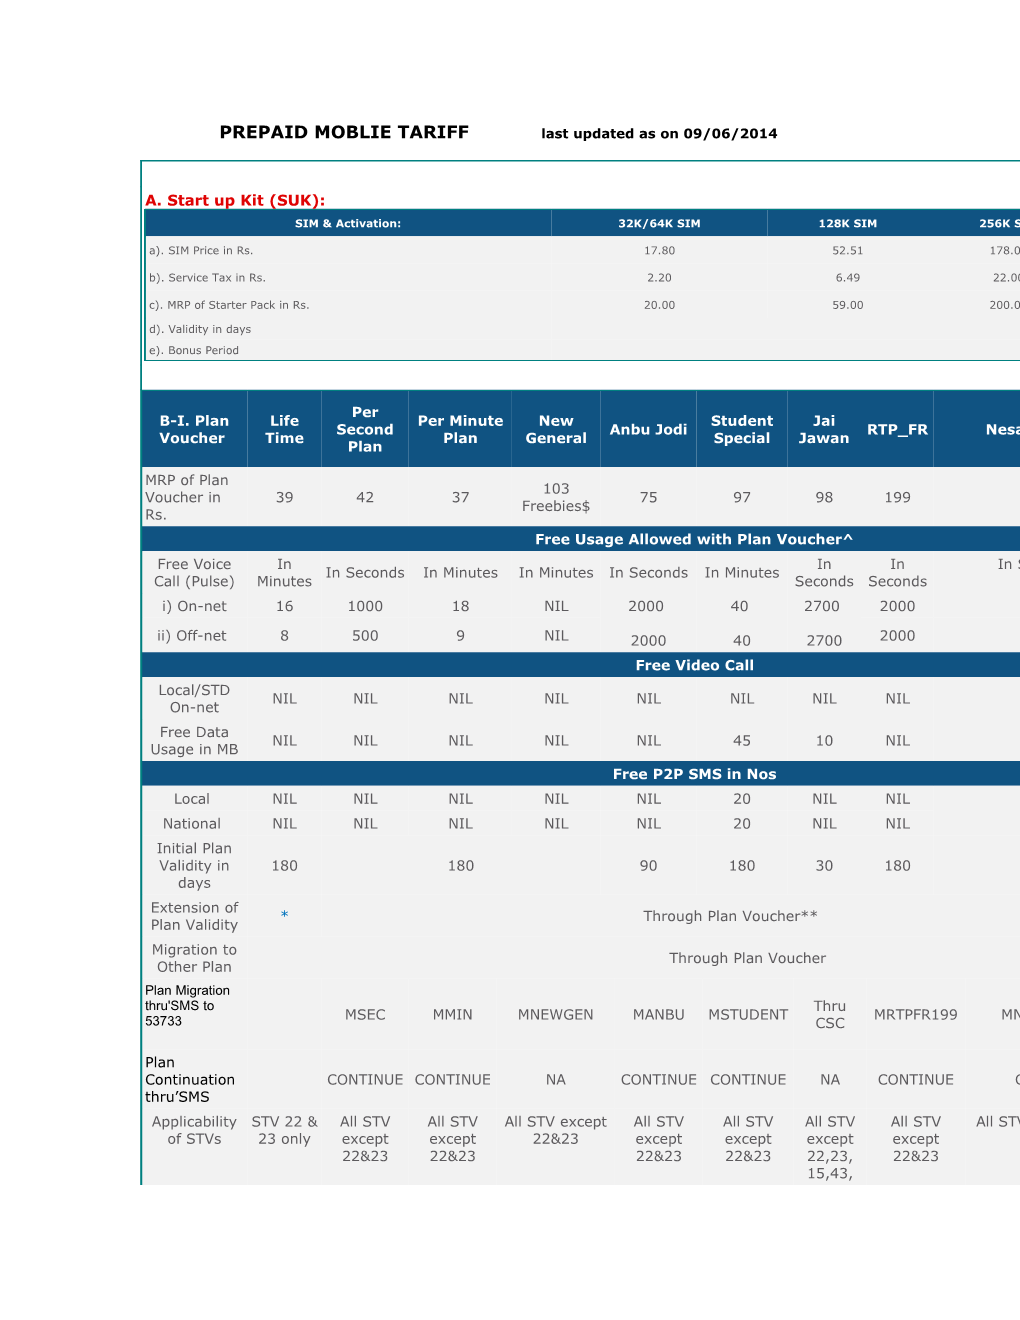 PREPAID MOBLIE Tarifflast Updated As on 09/06/2014